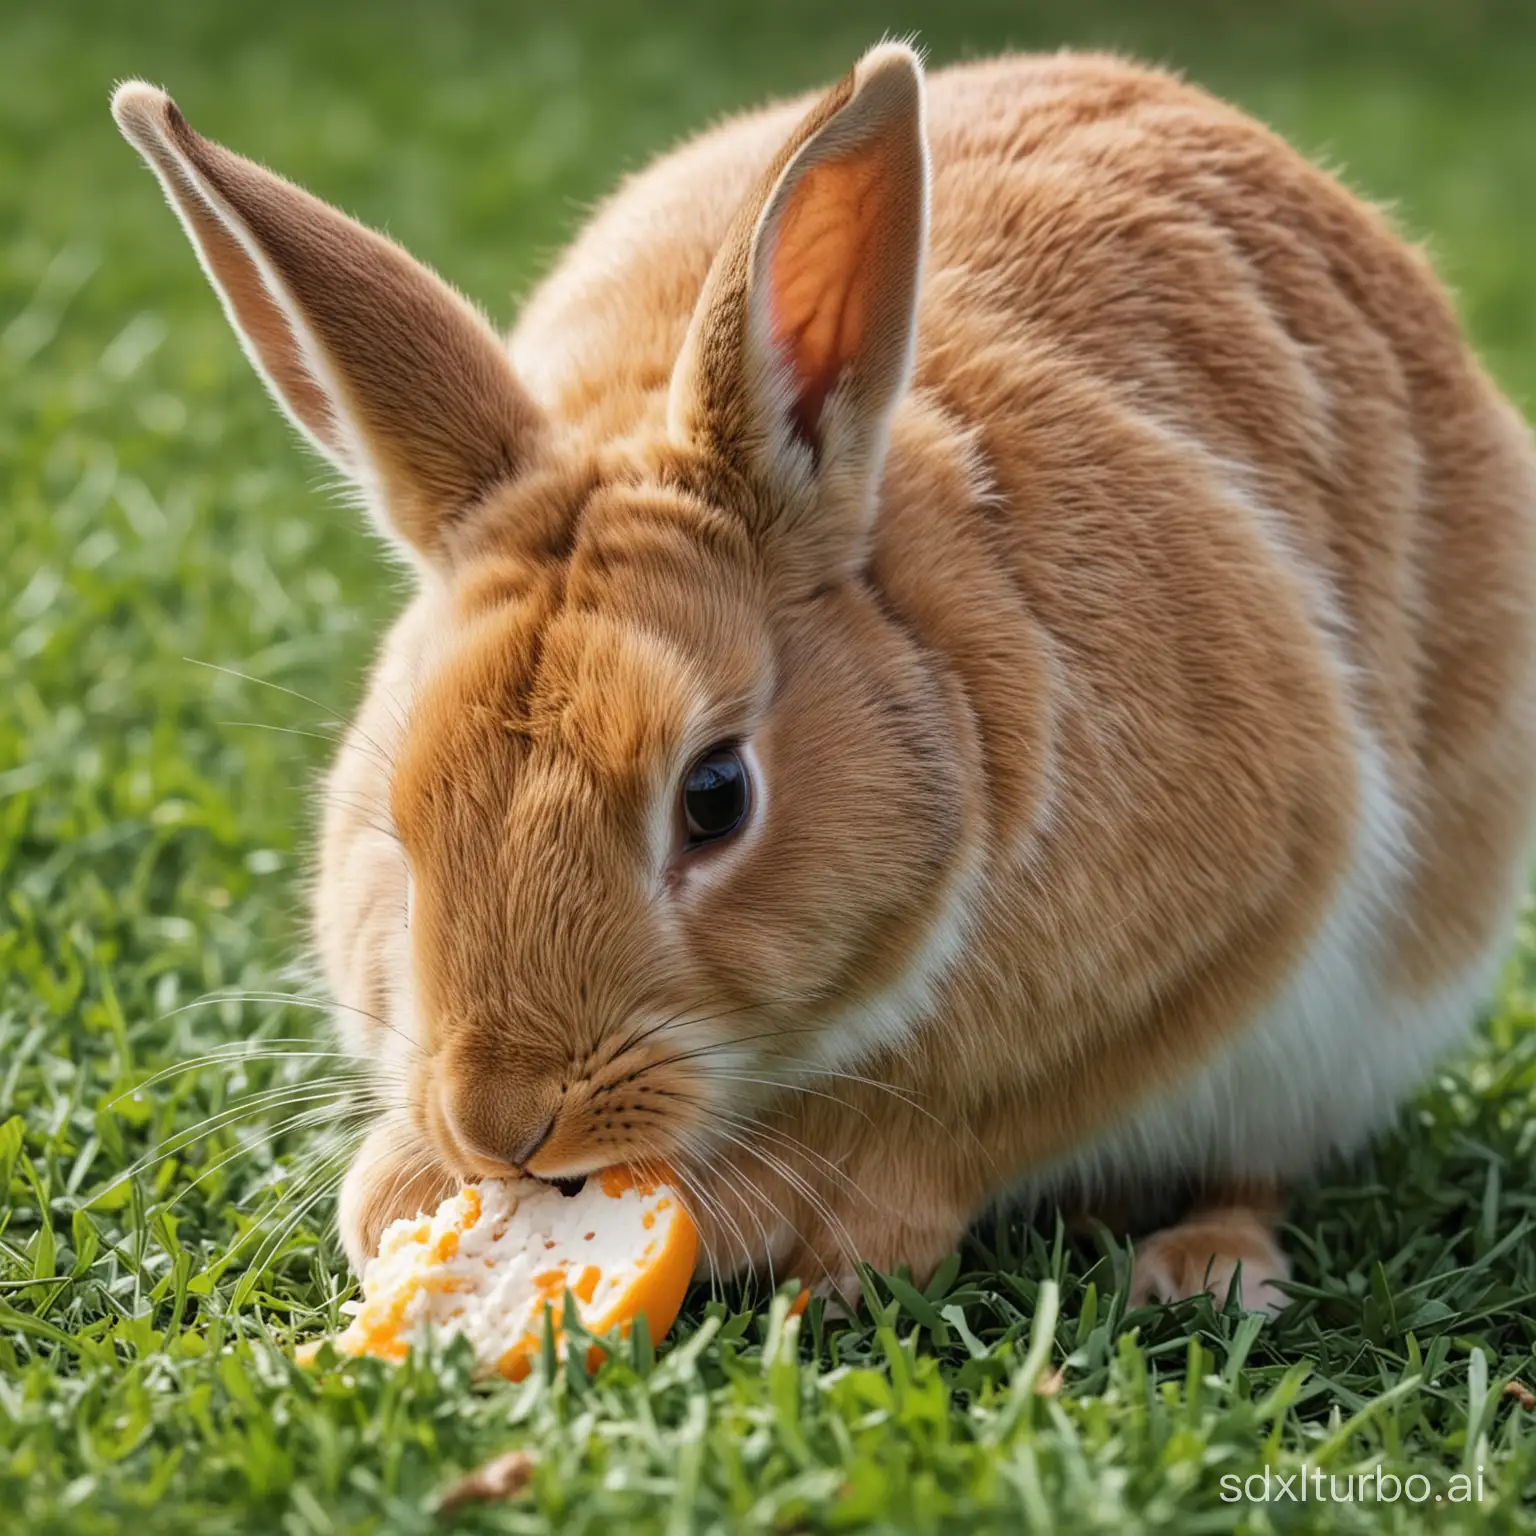 A rabbit eating